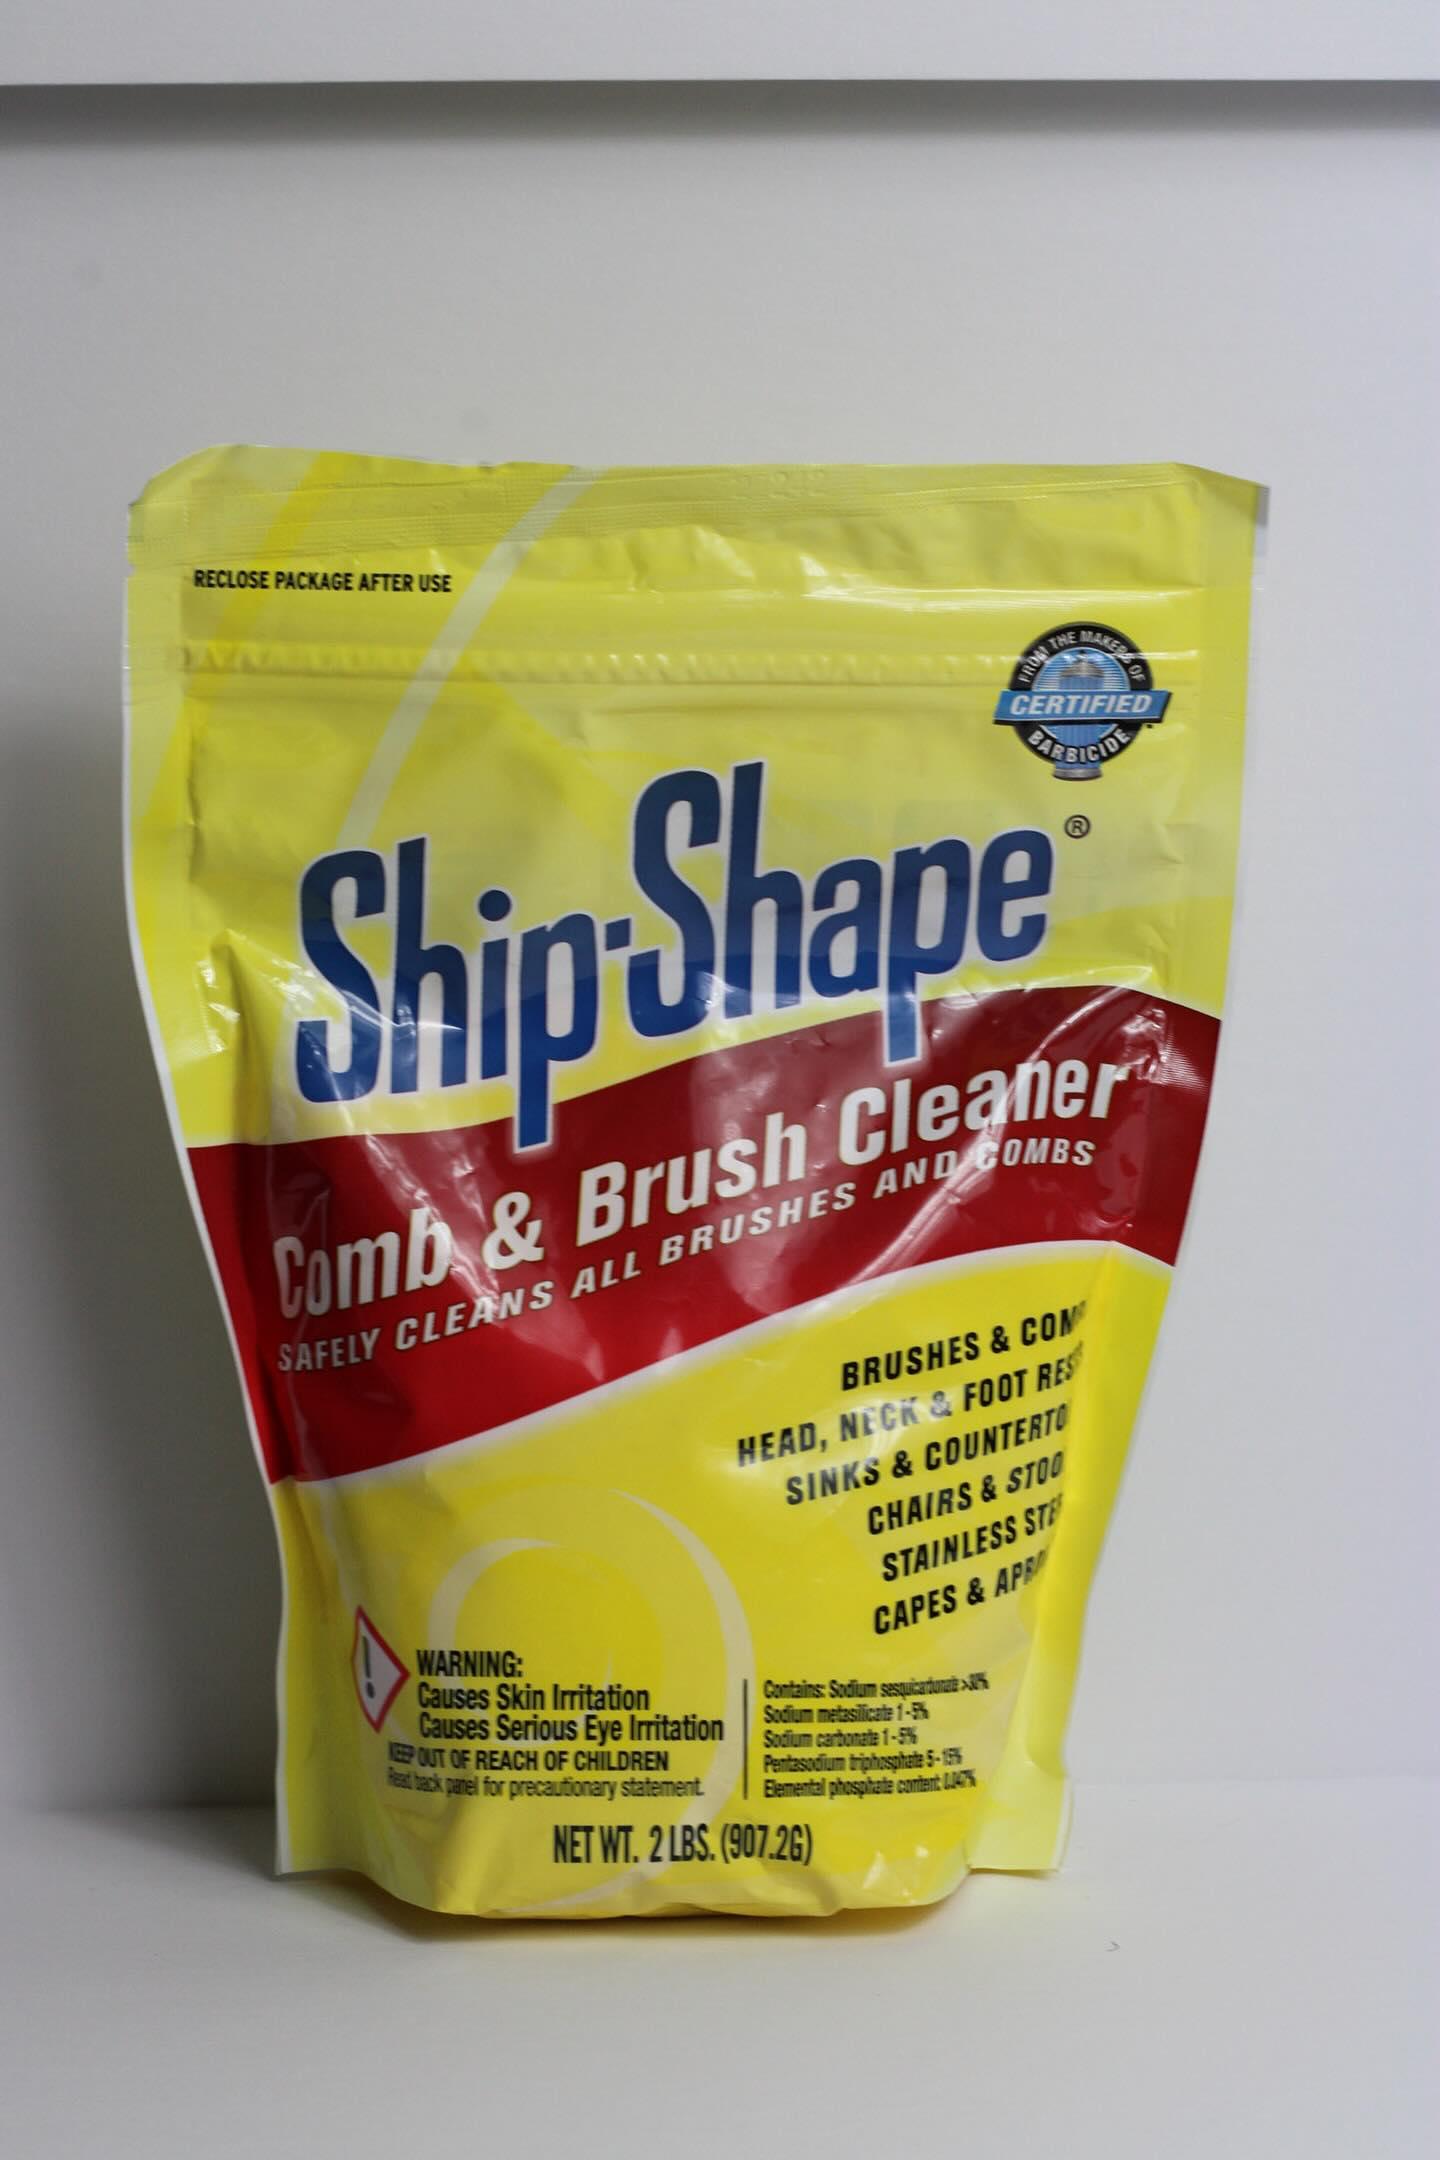 Ship Shape Comb & Brush Cleaner